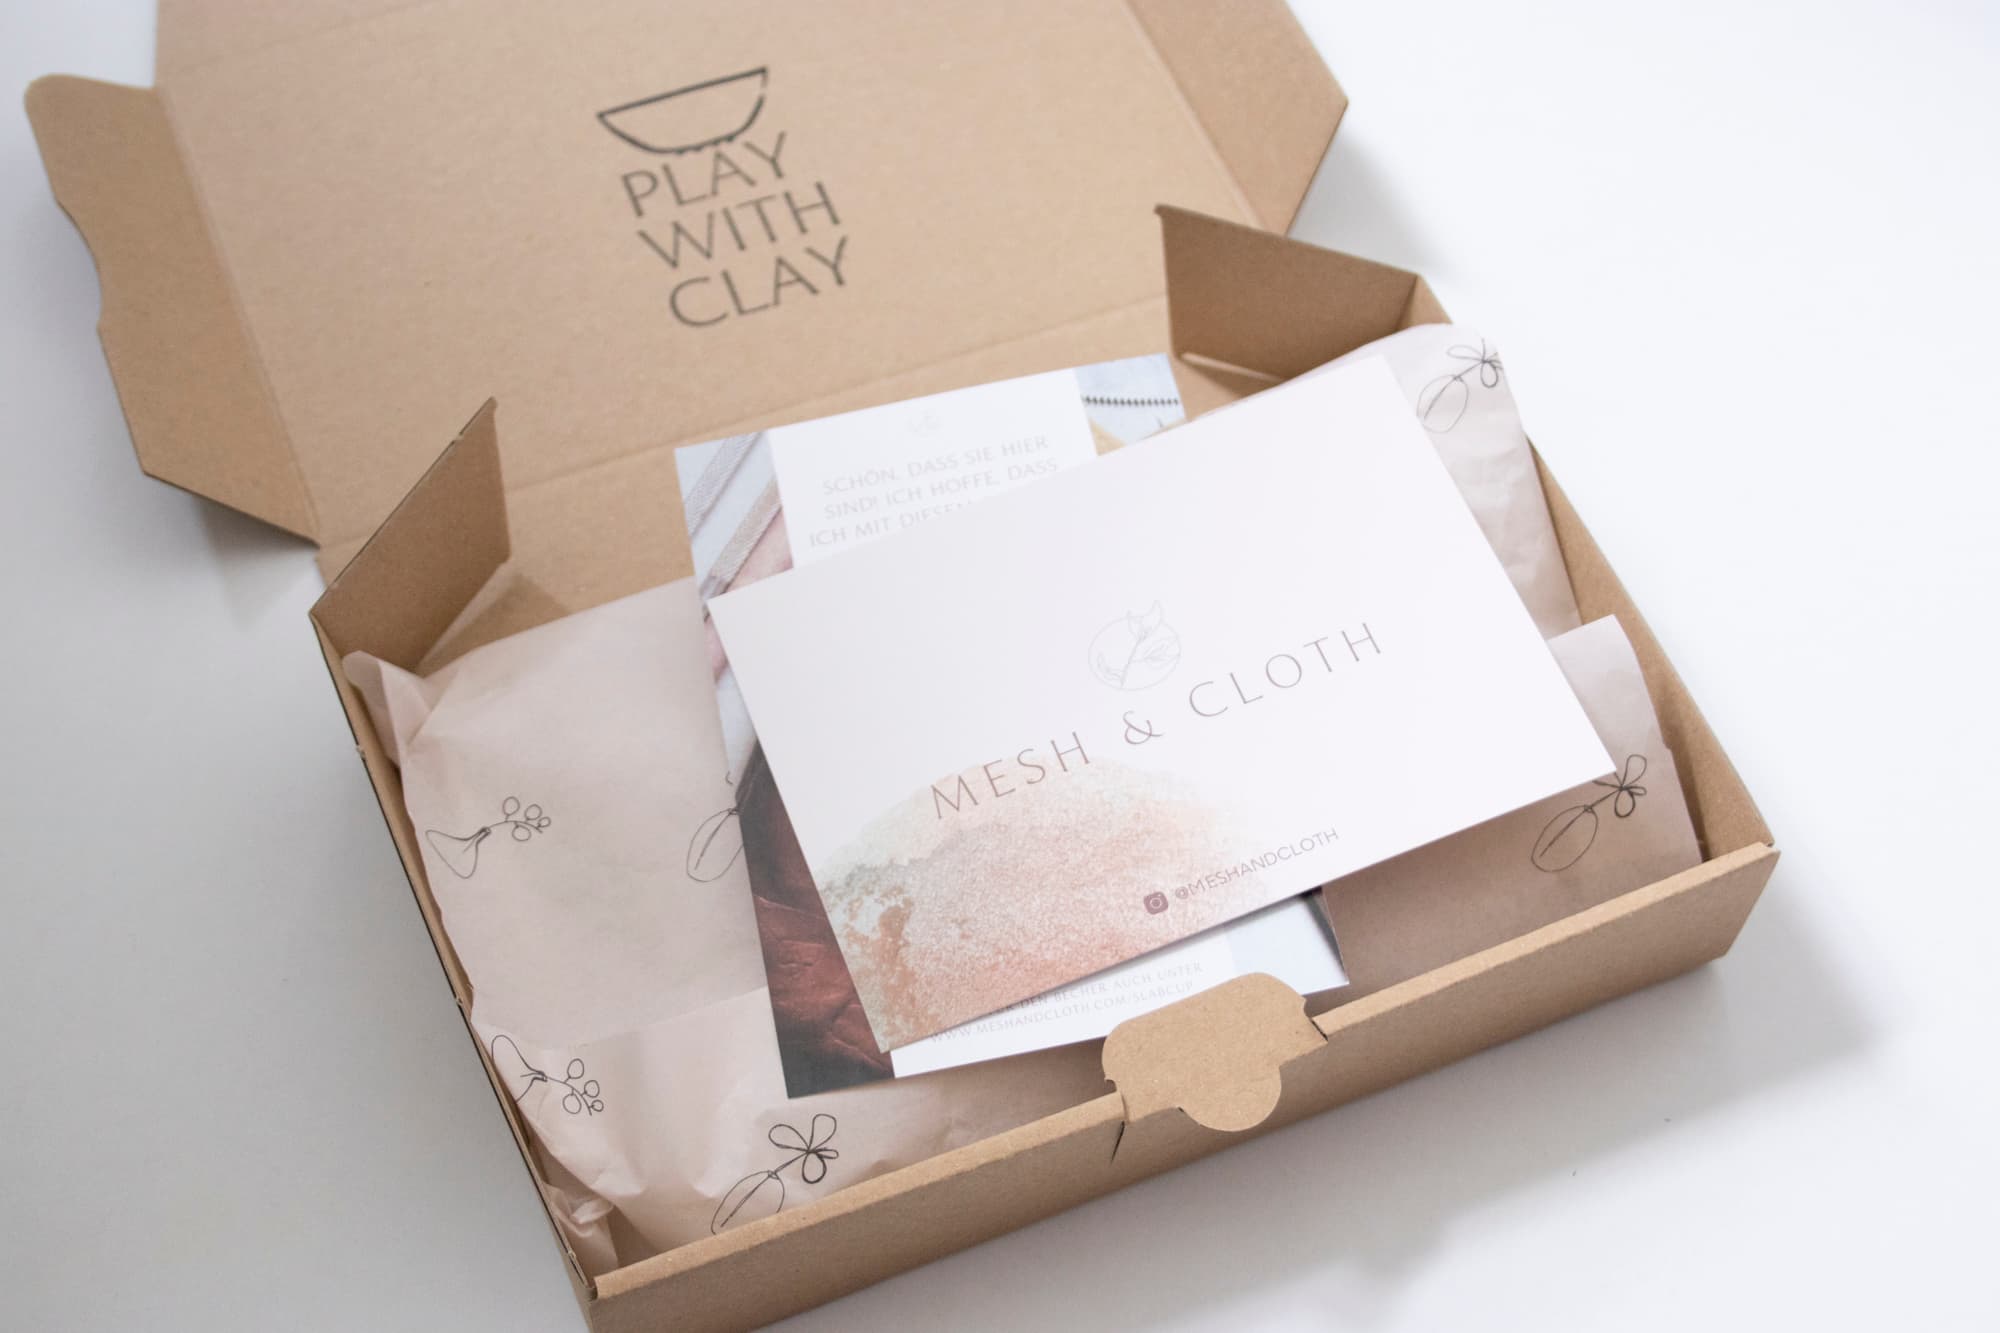 DIY Air Dry Clay Kit (Prepaid Membership)